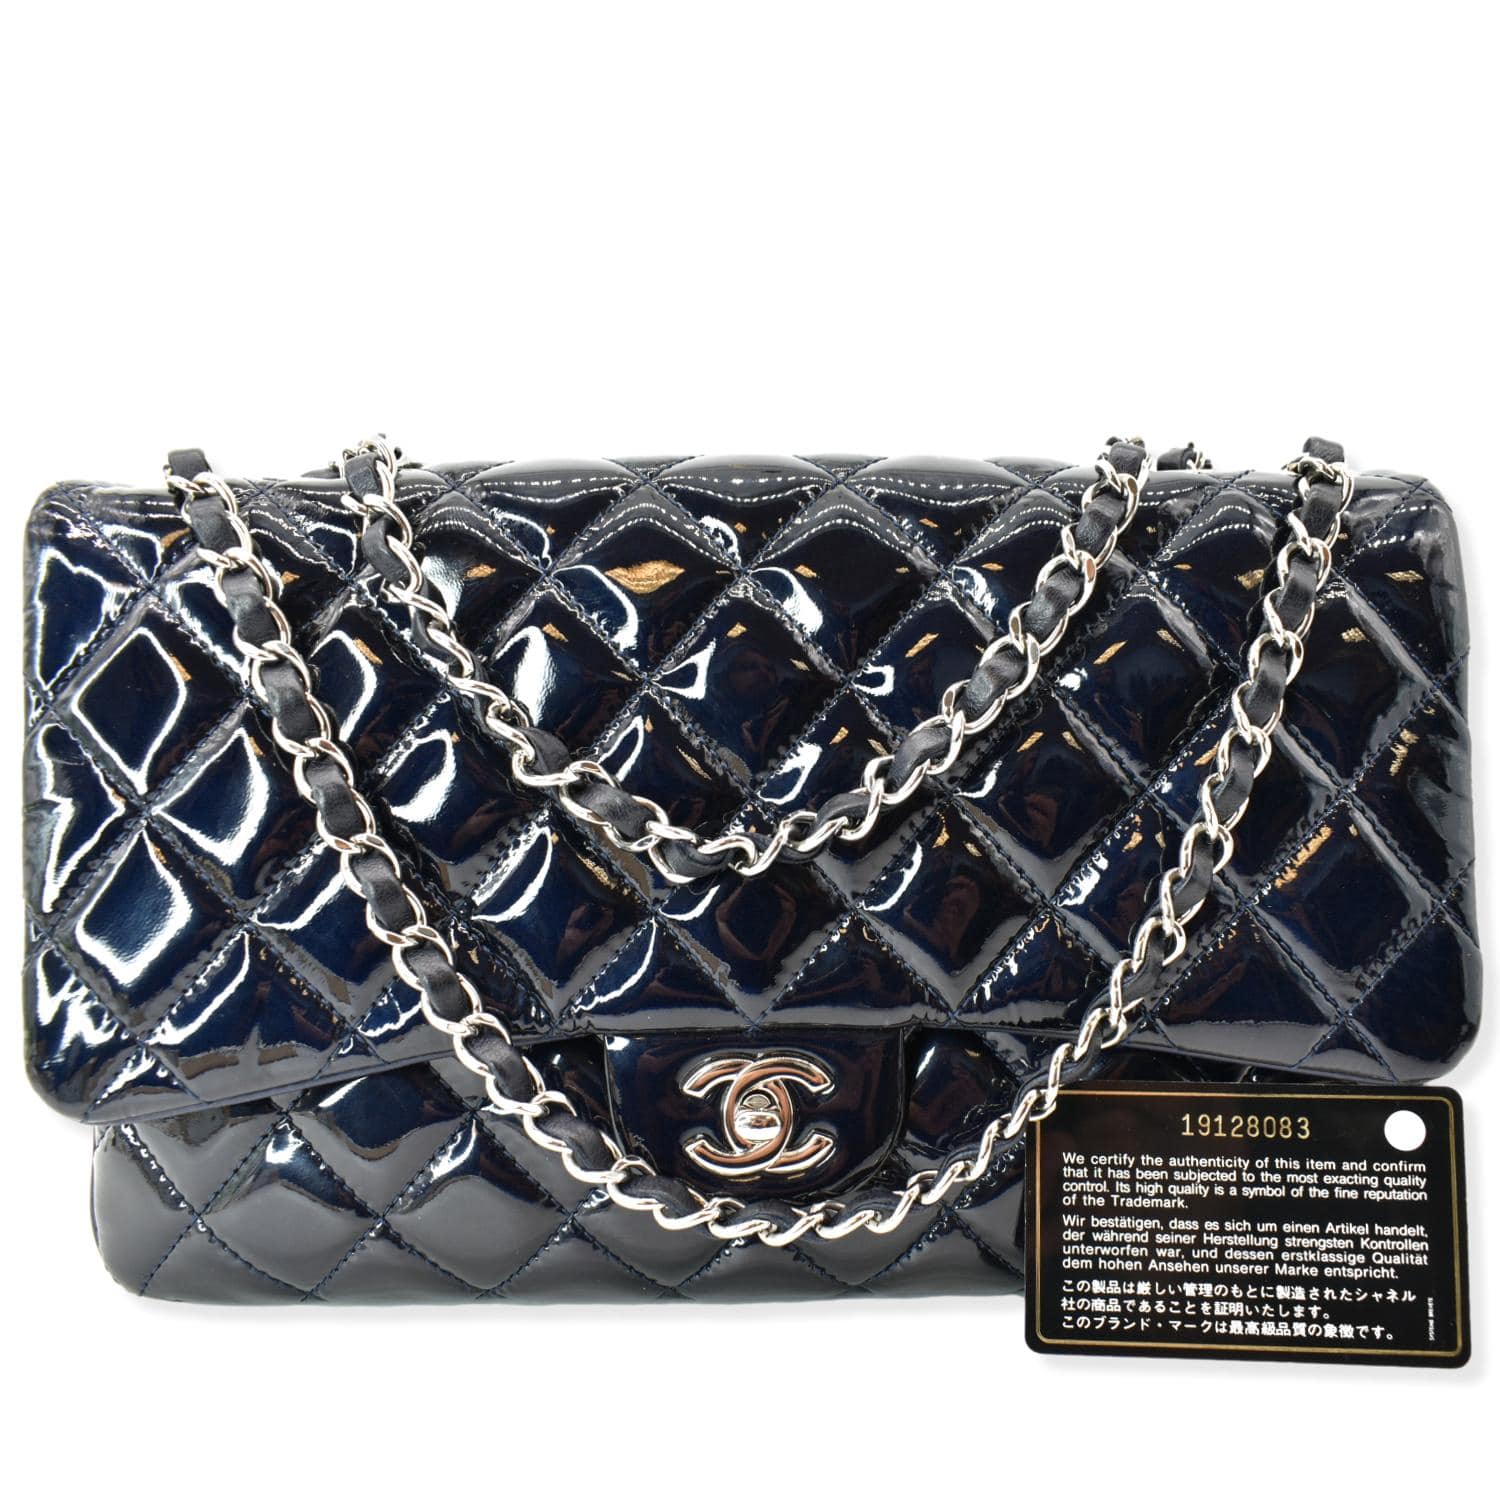 Fashion « Chanel-Vuitton », Sale n°2089, Lot n°139